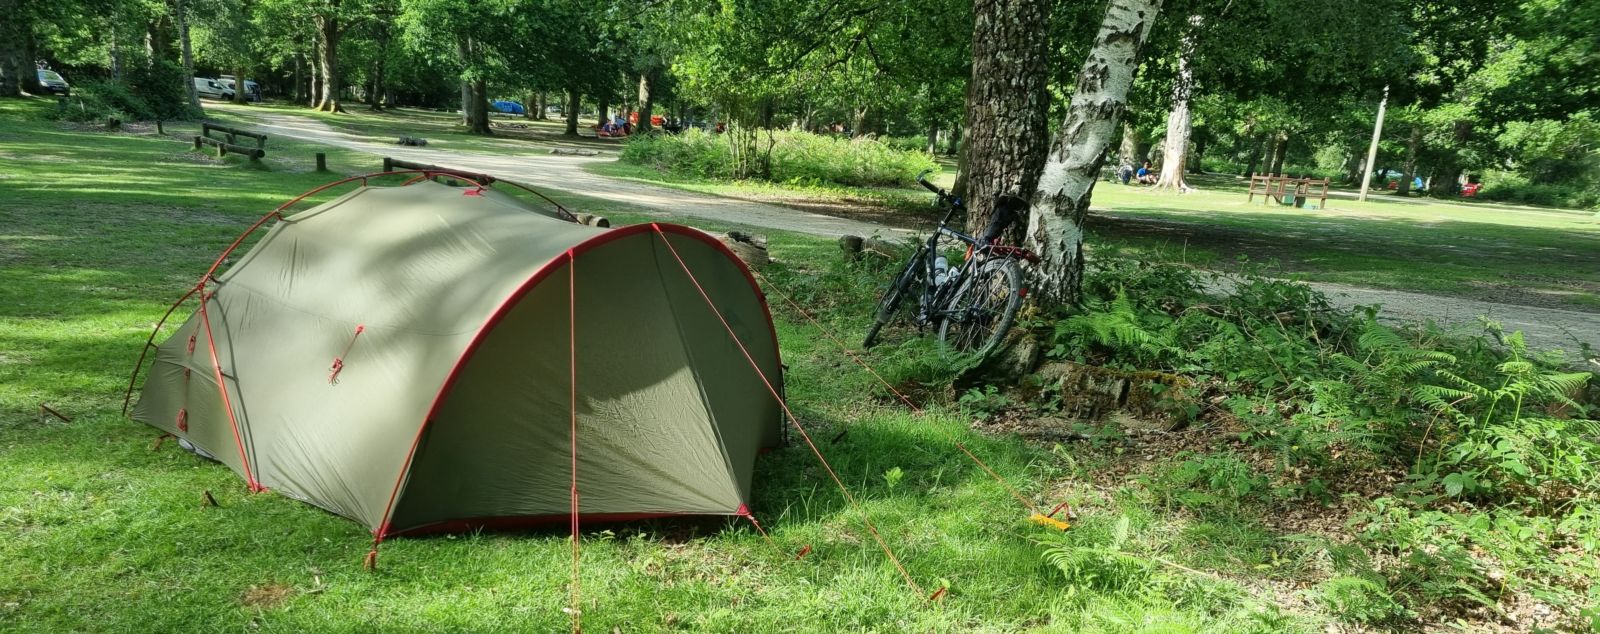 Tent and bike